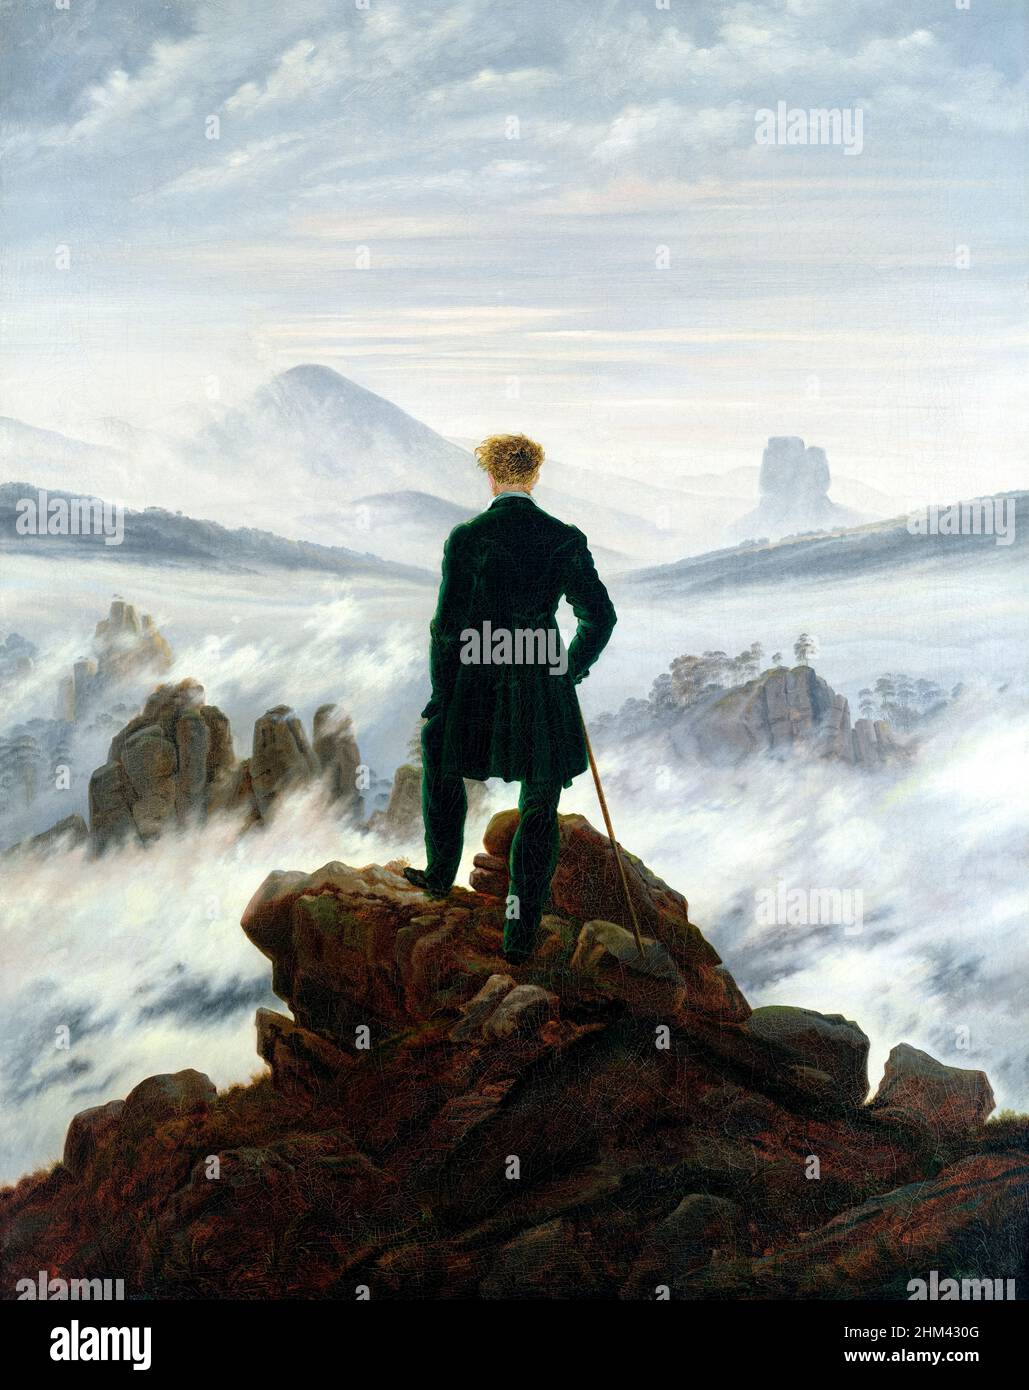 Wanderer sopra il Mare di nebbia [Der Wanderer über dem Nebelmeer] del pittore tedesco Caspar David Friedrich (1774-1840) dipinto intorno al 1818. Foto Stock